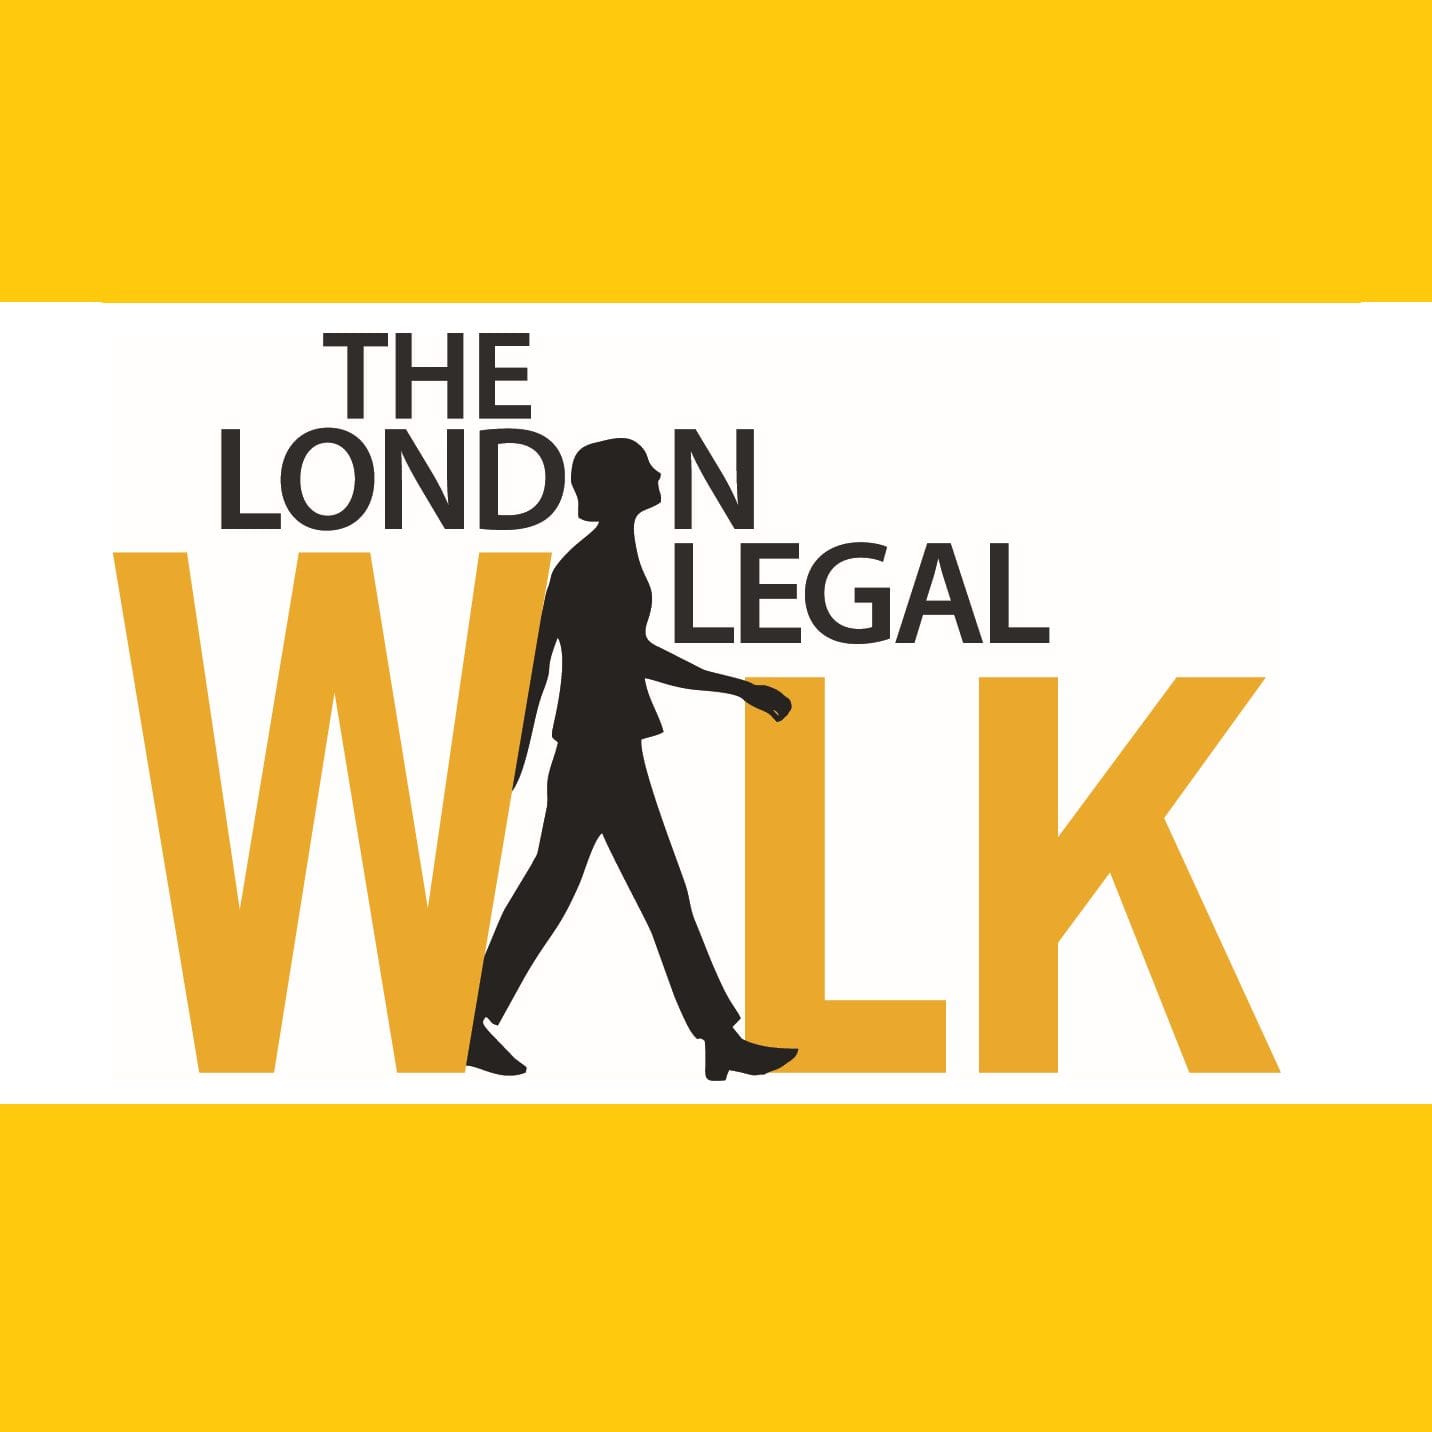 London Legal Walk